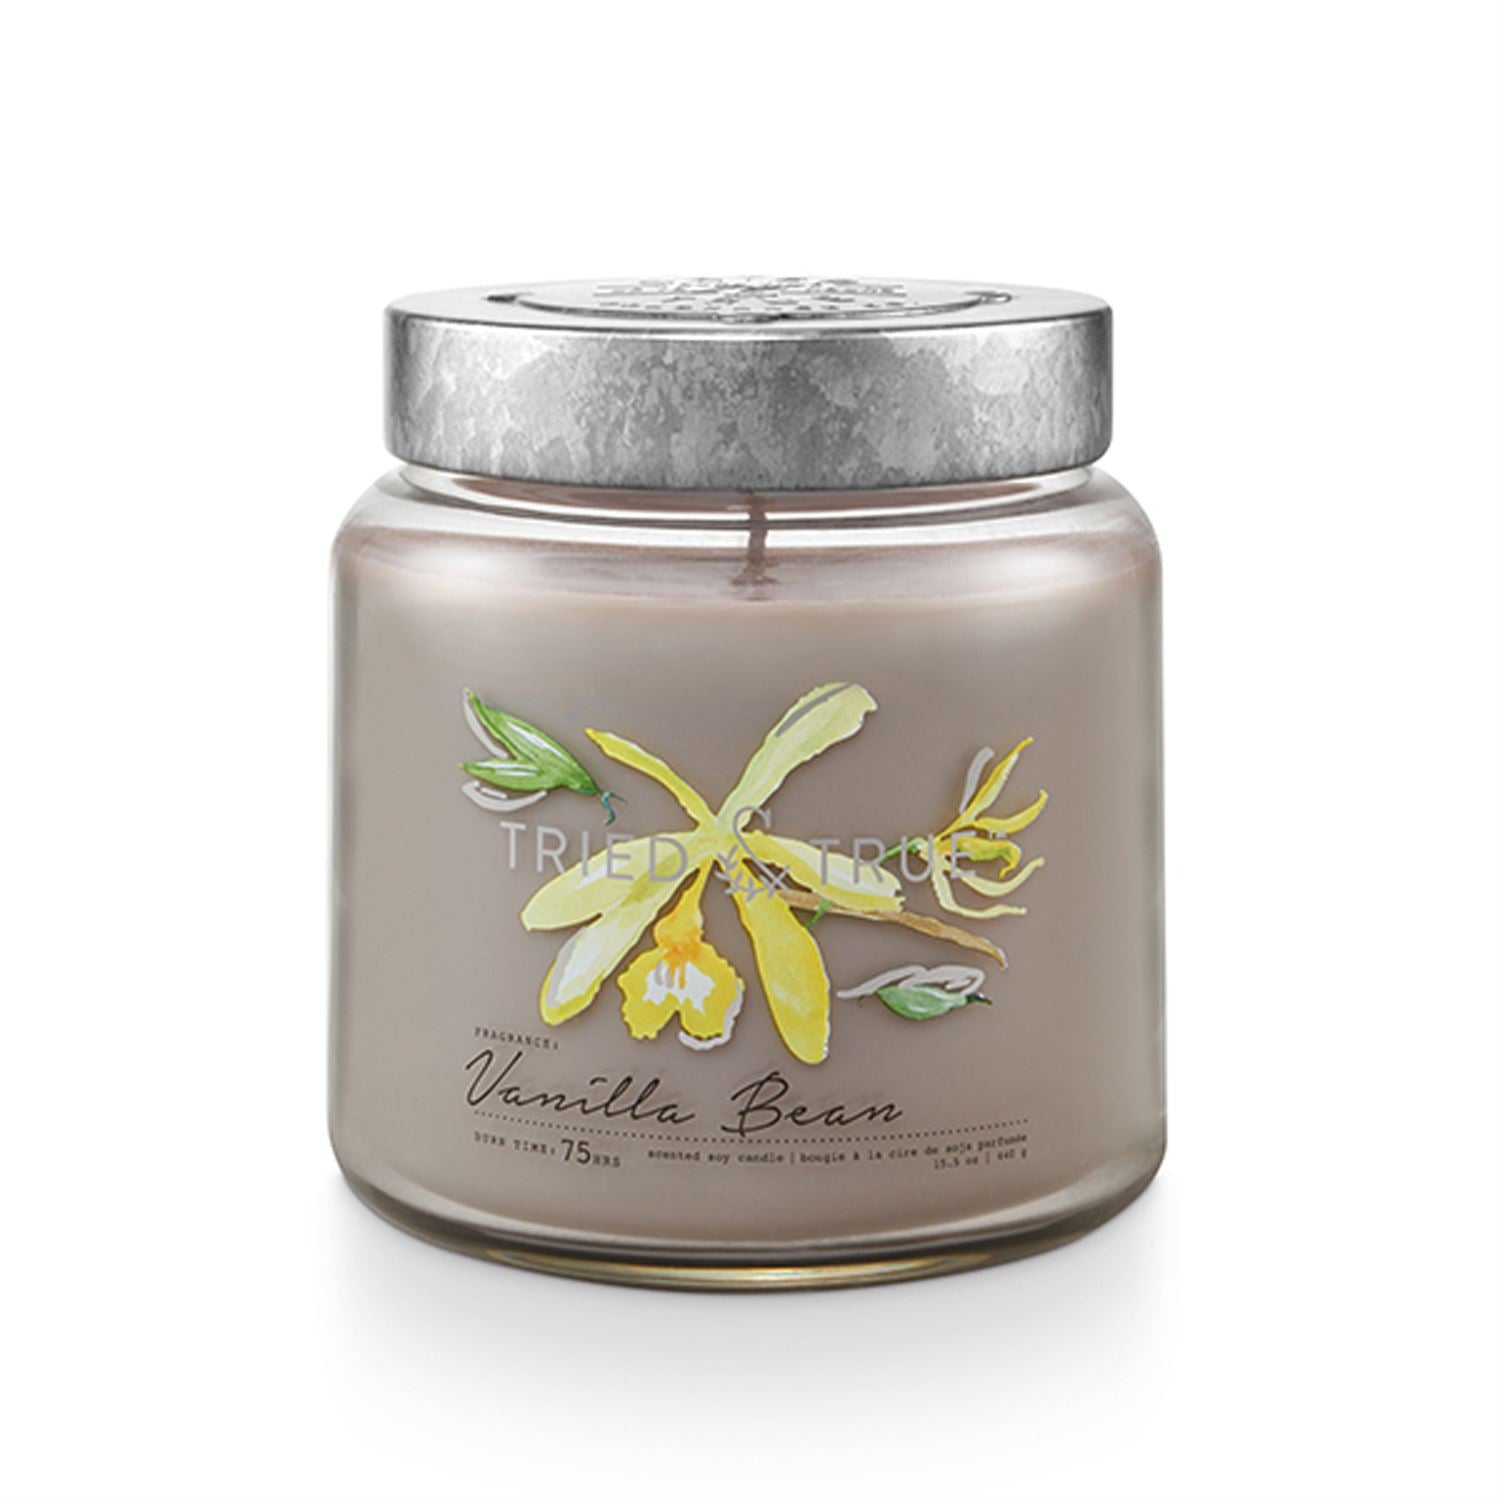 Tried & True Medium Jar Candle: Vanilla Bean